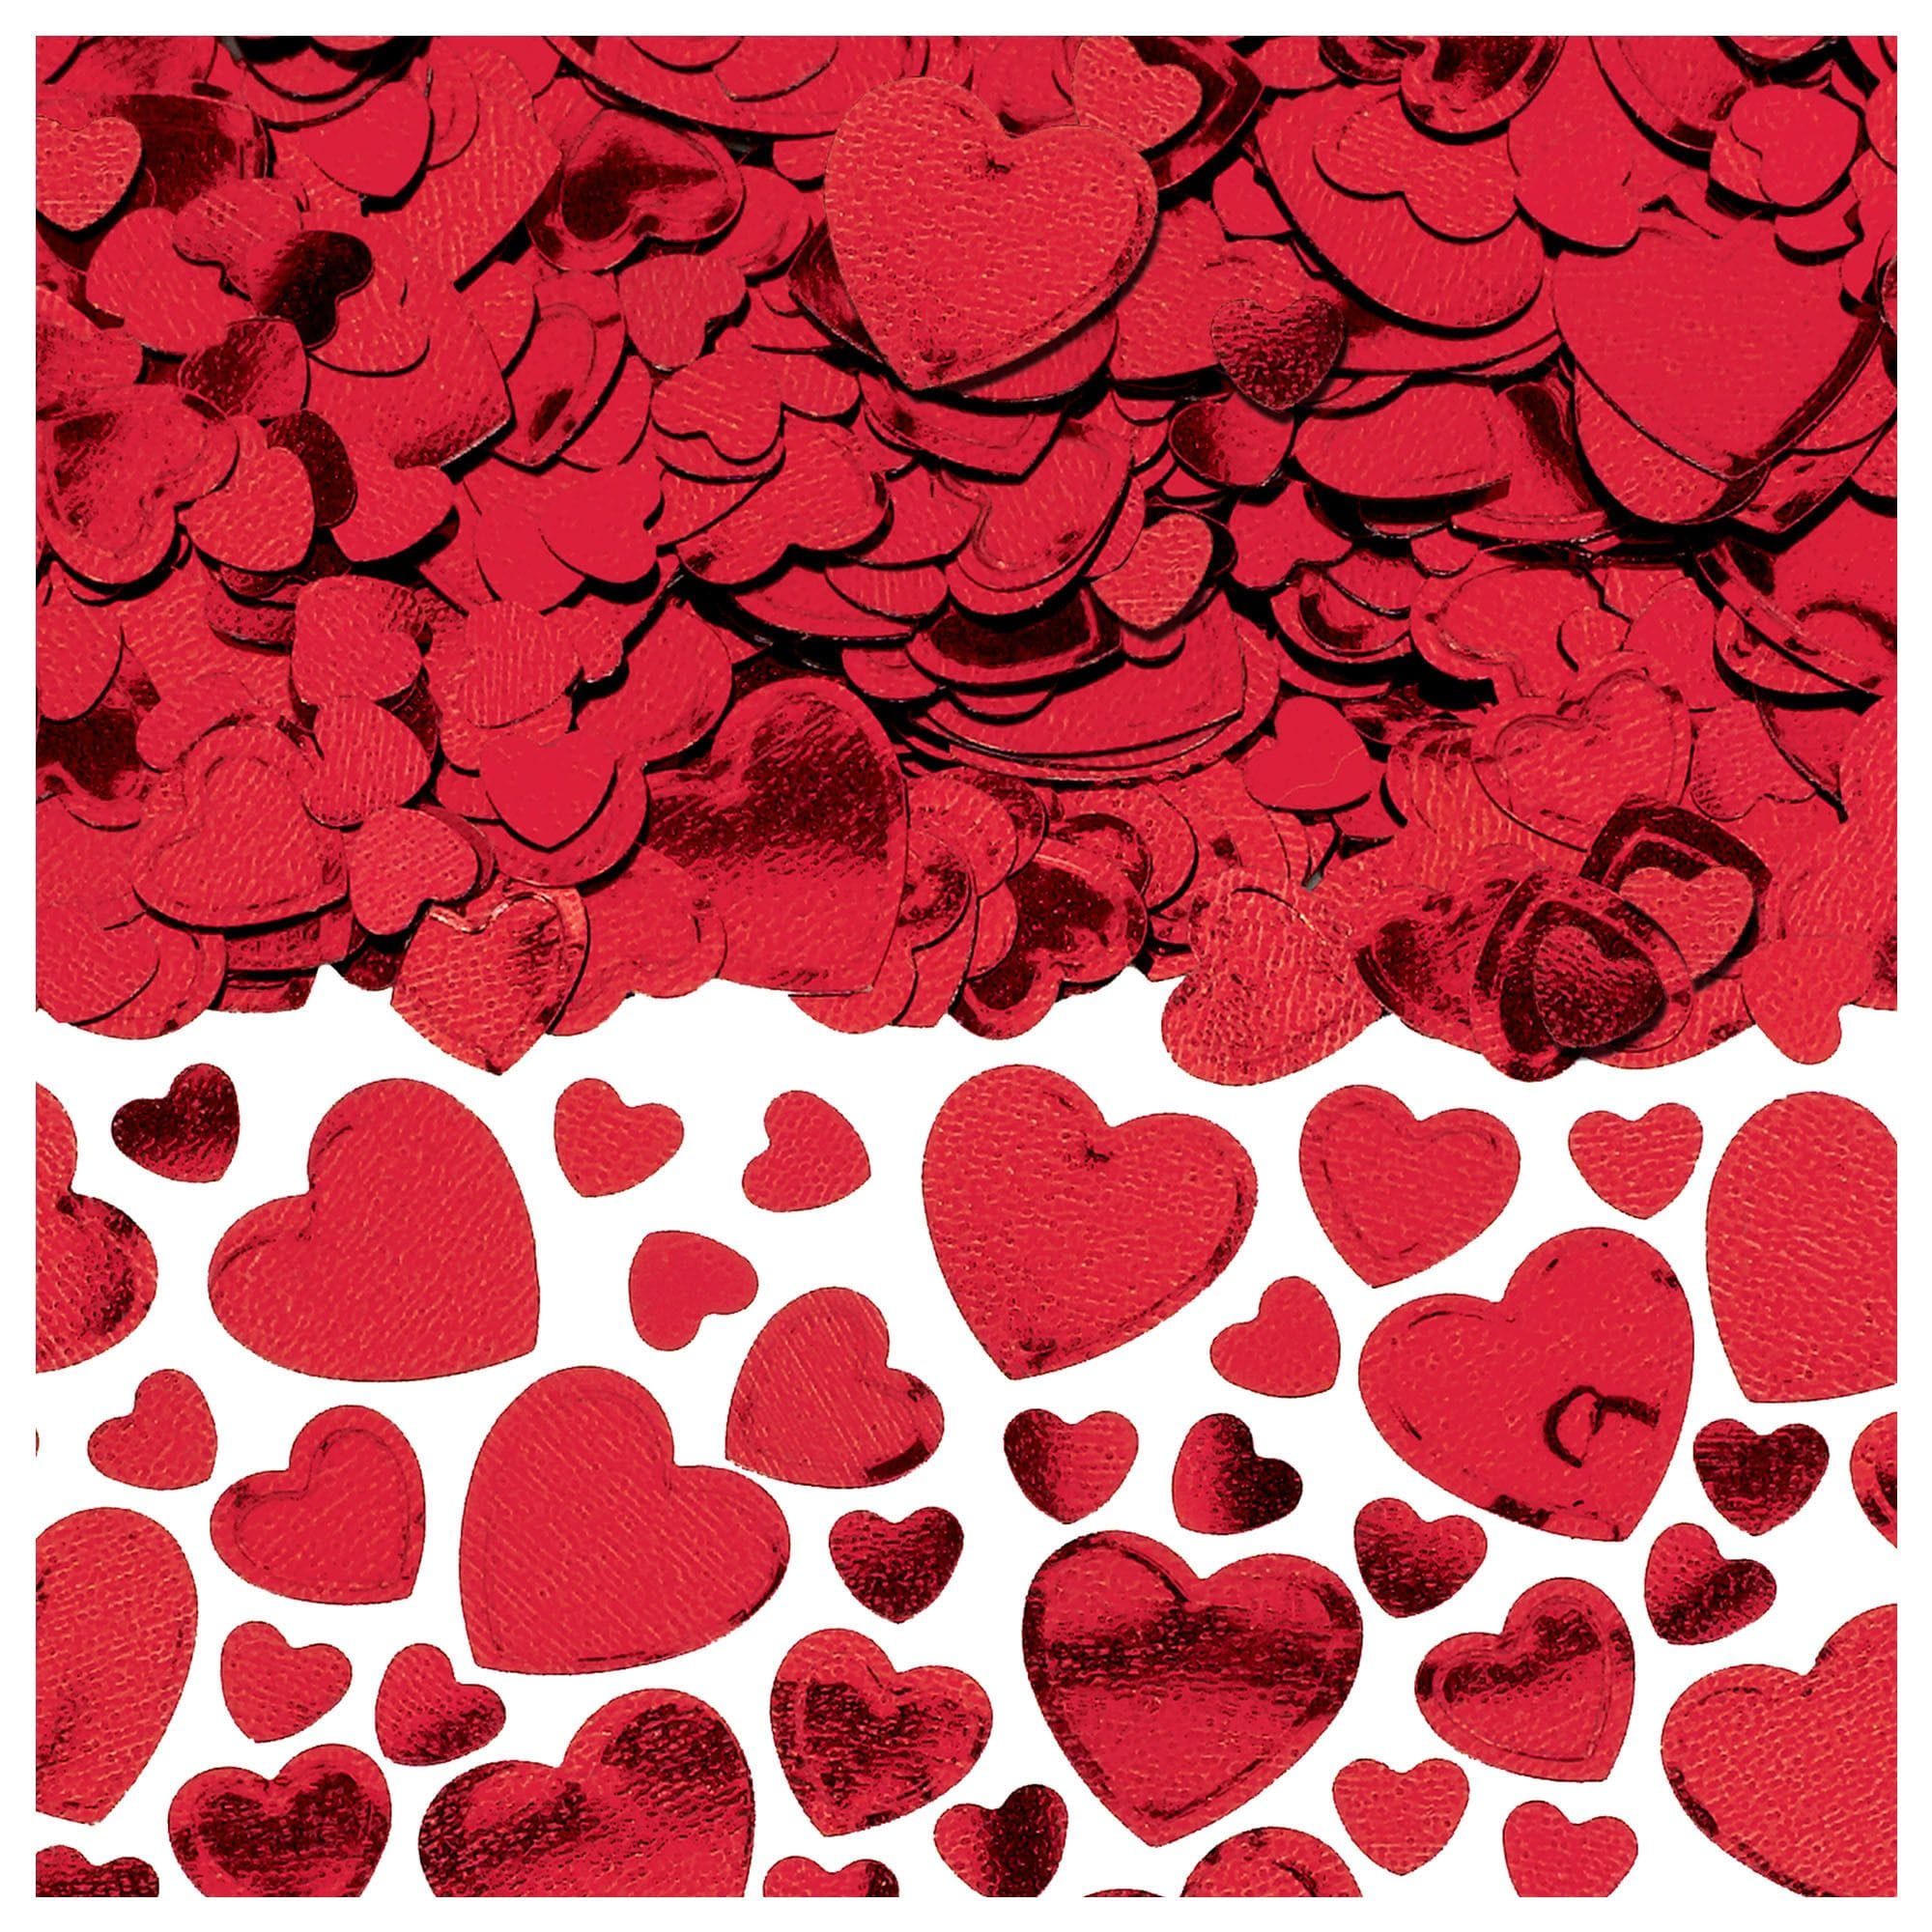 Amscan DECORATIONS Red Metallic Hearts Confetti